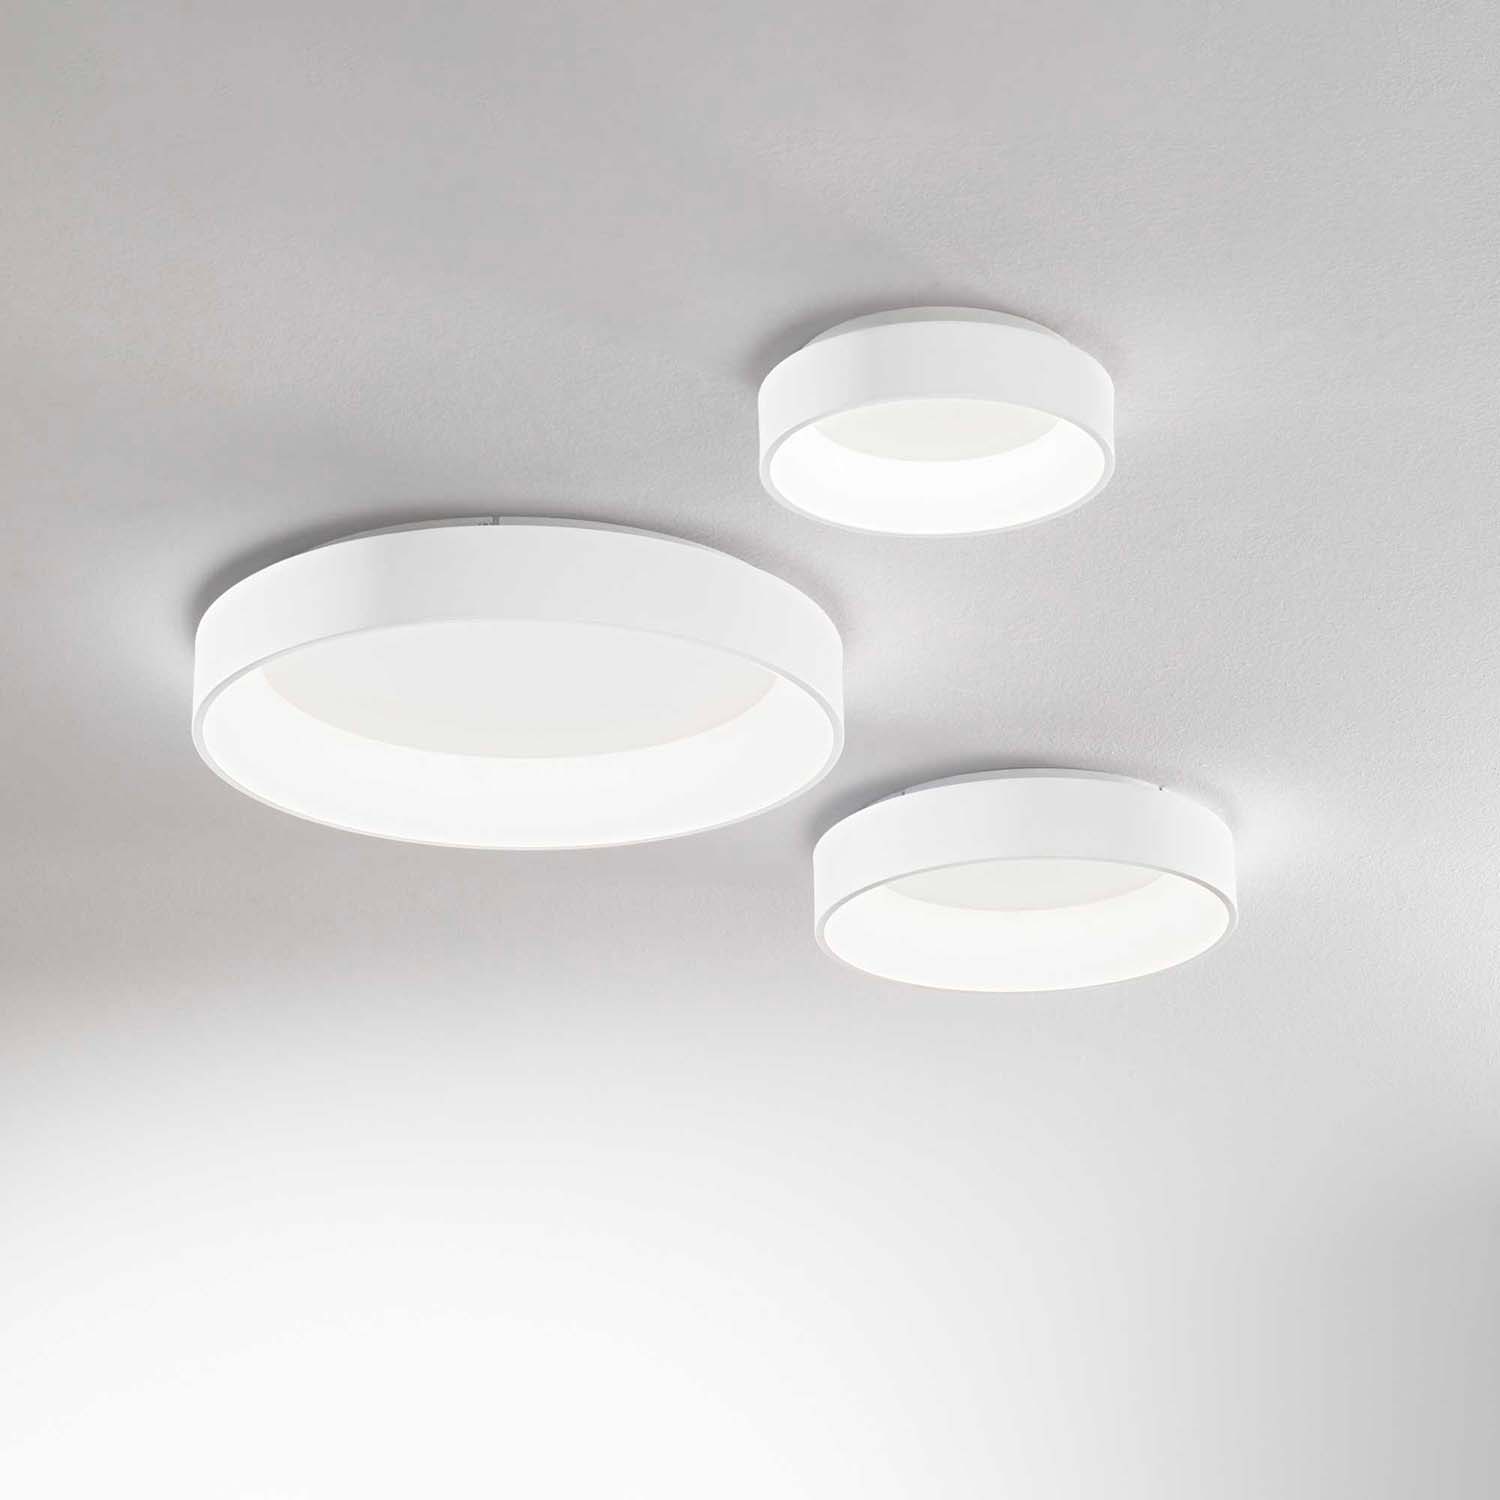 ZIGGY - Round designer ceiling light, white or black, large diameter